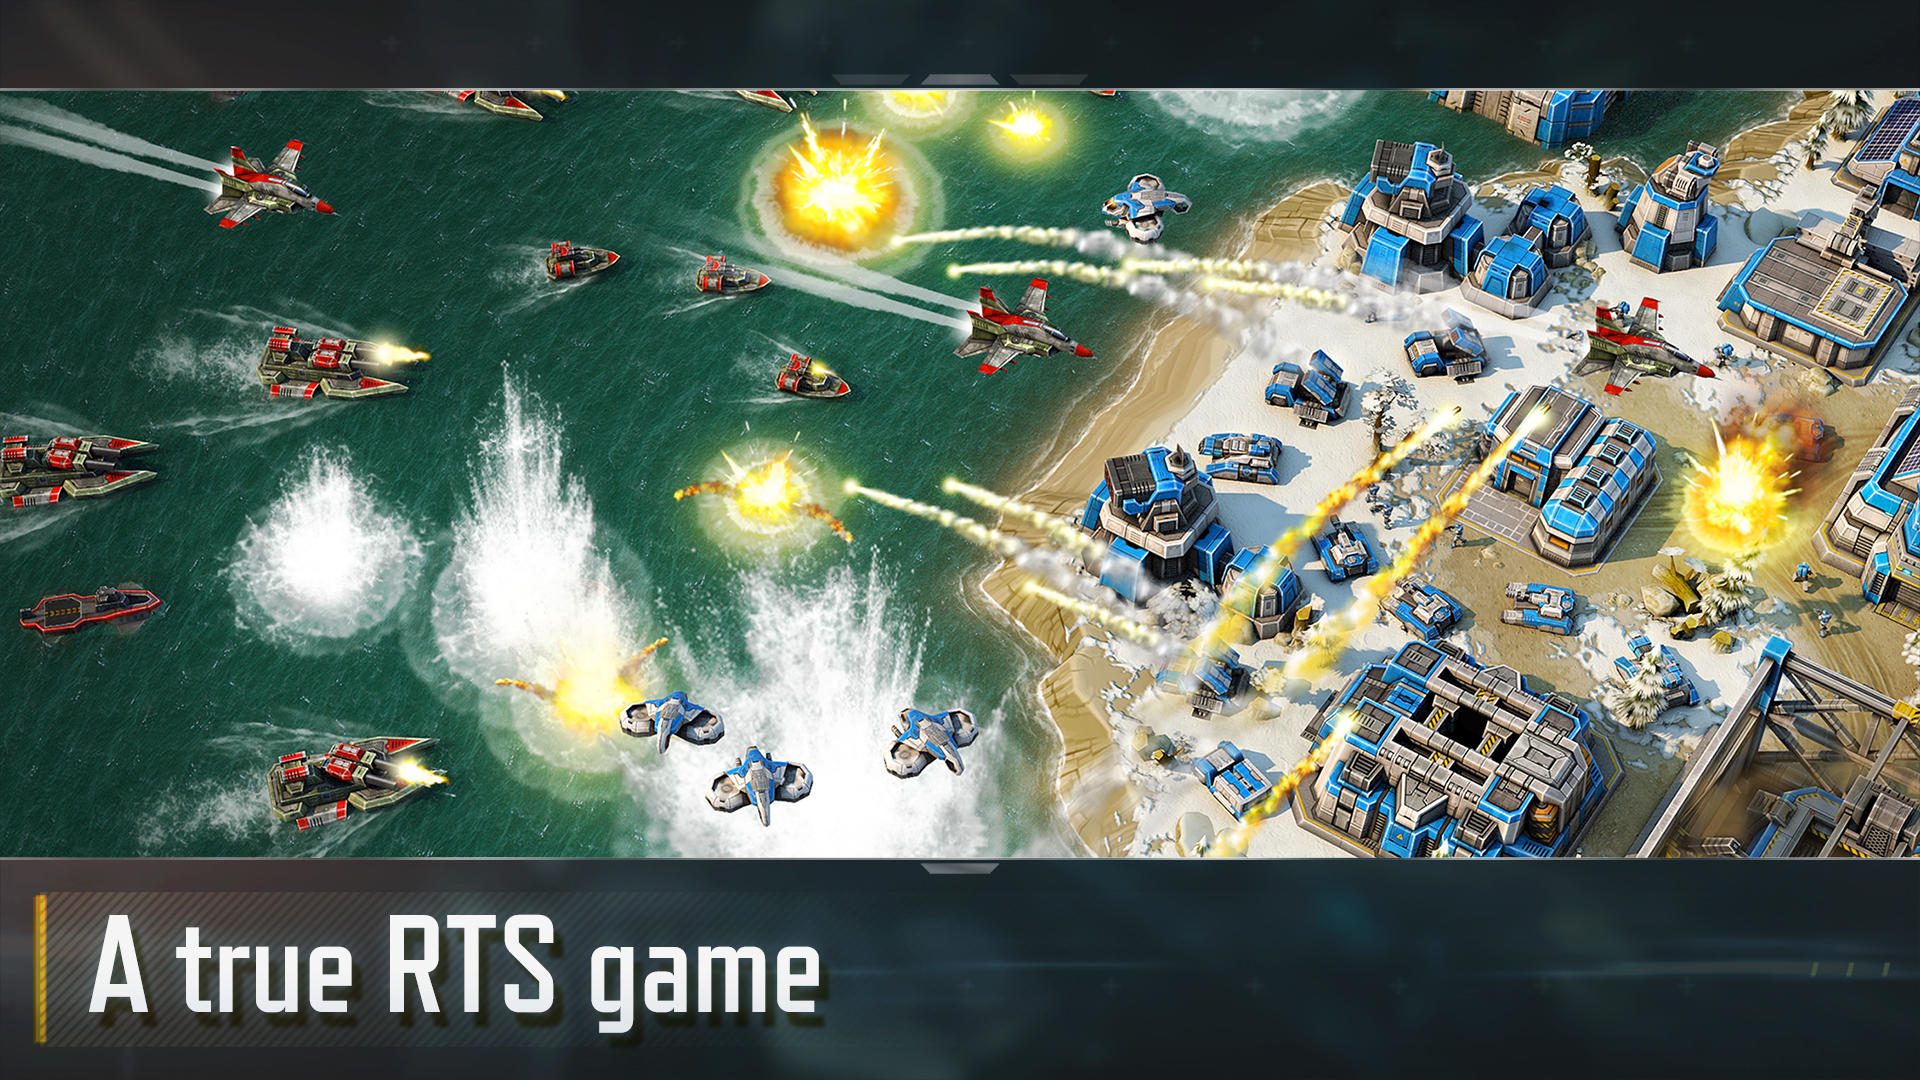 Screenshot 1 of Art of War 3: Permainan strategi RTS 4.4.10